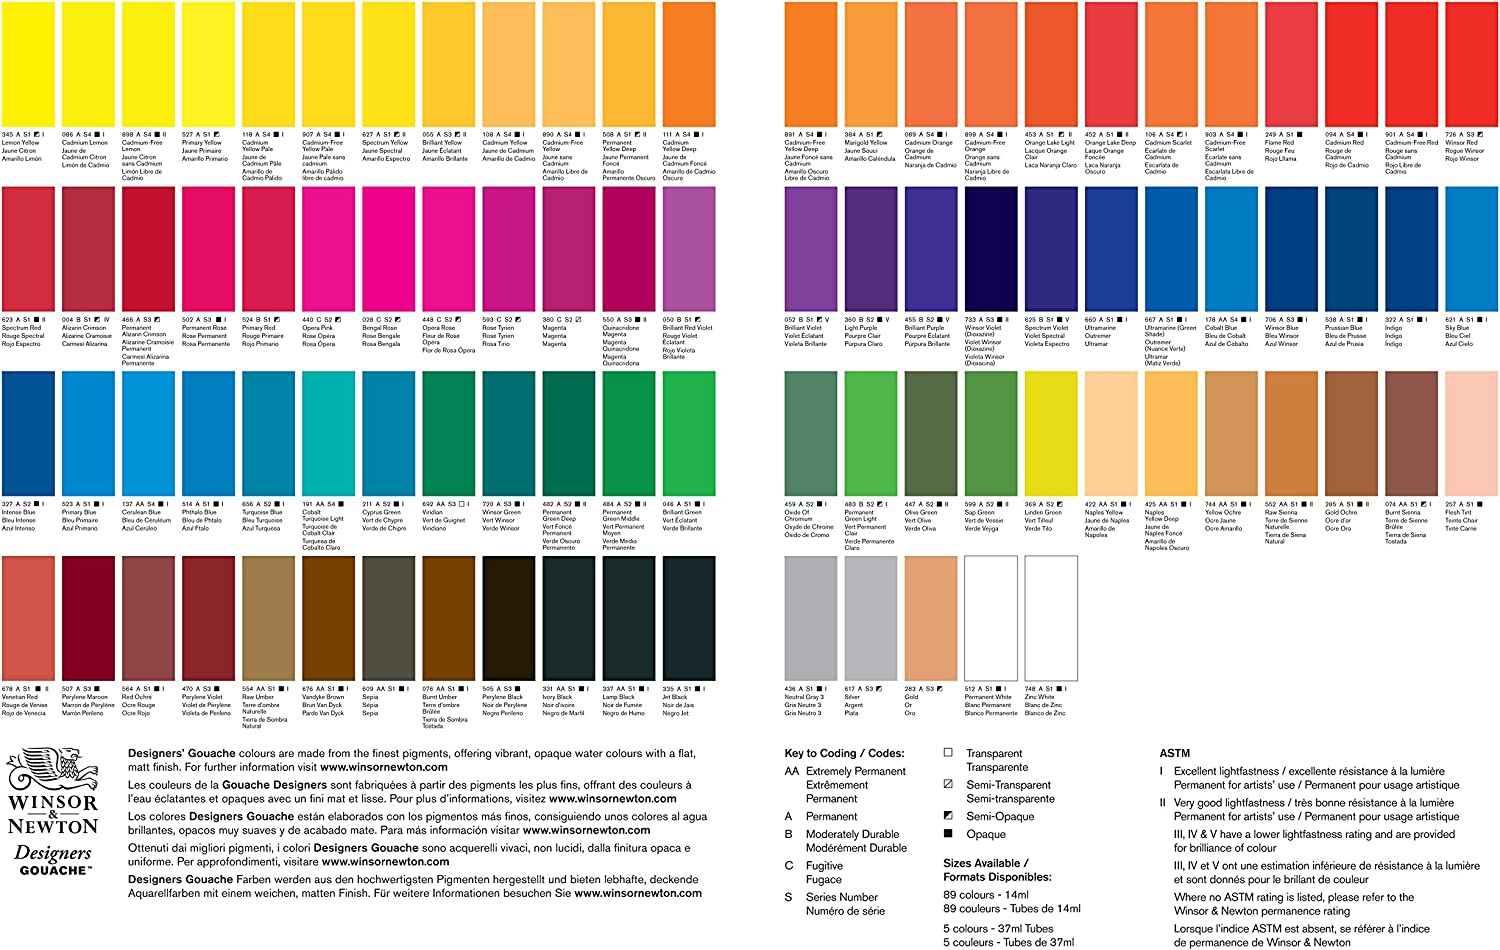 Winsor & Newton Designers' Gouache Introductory Paint Set shades